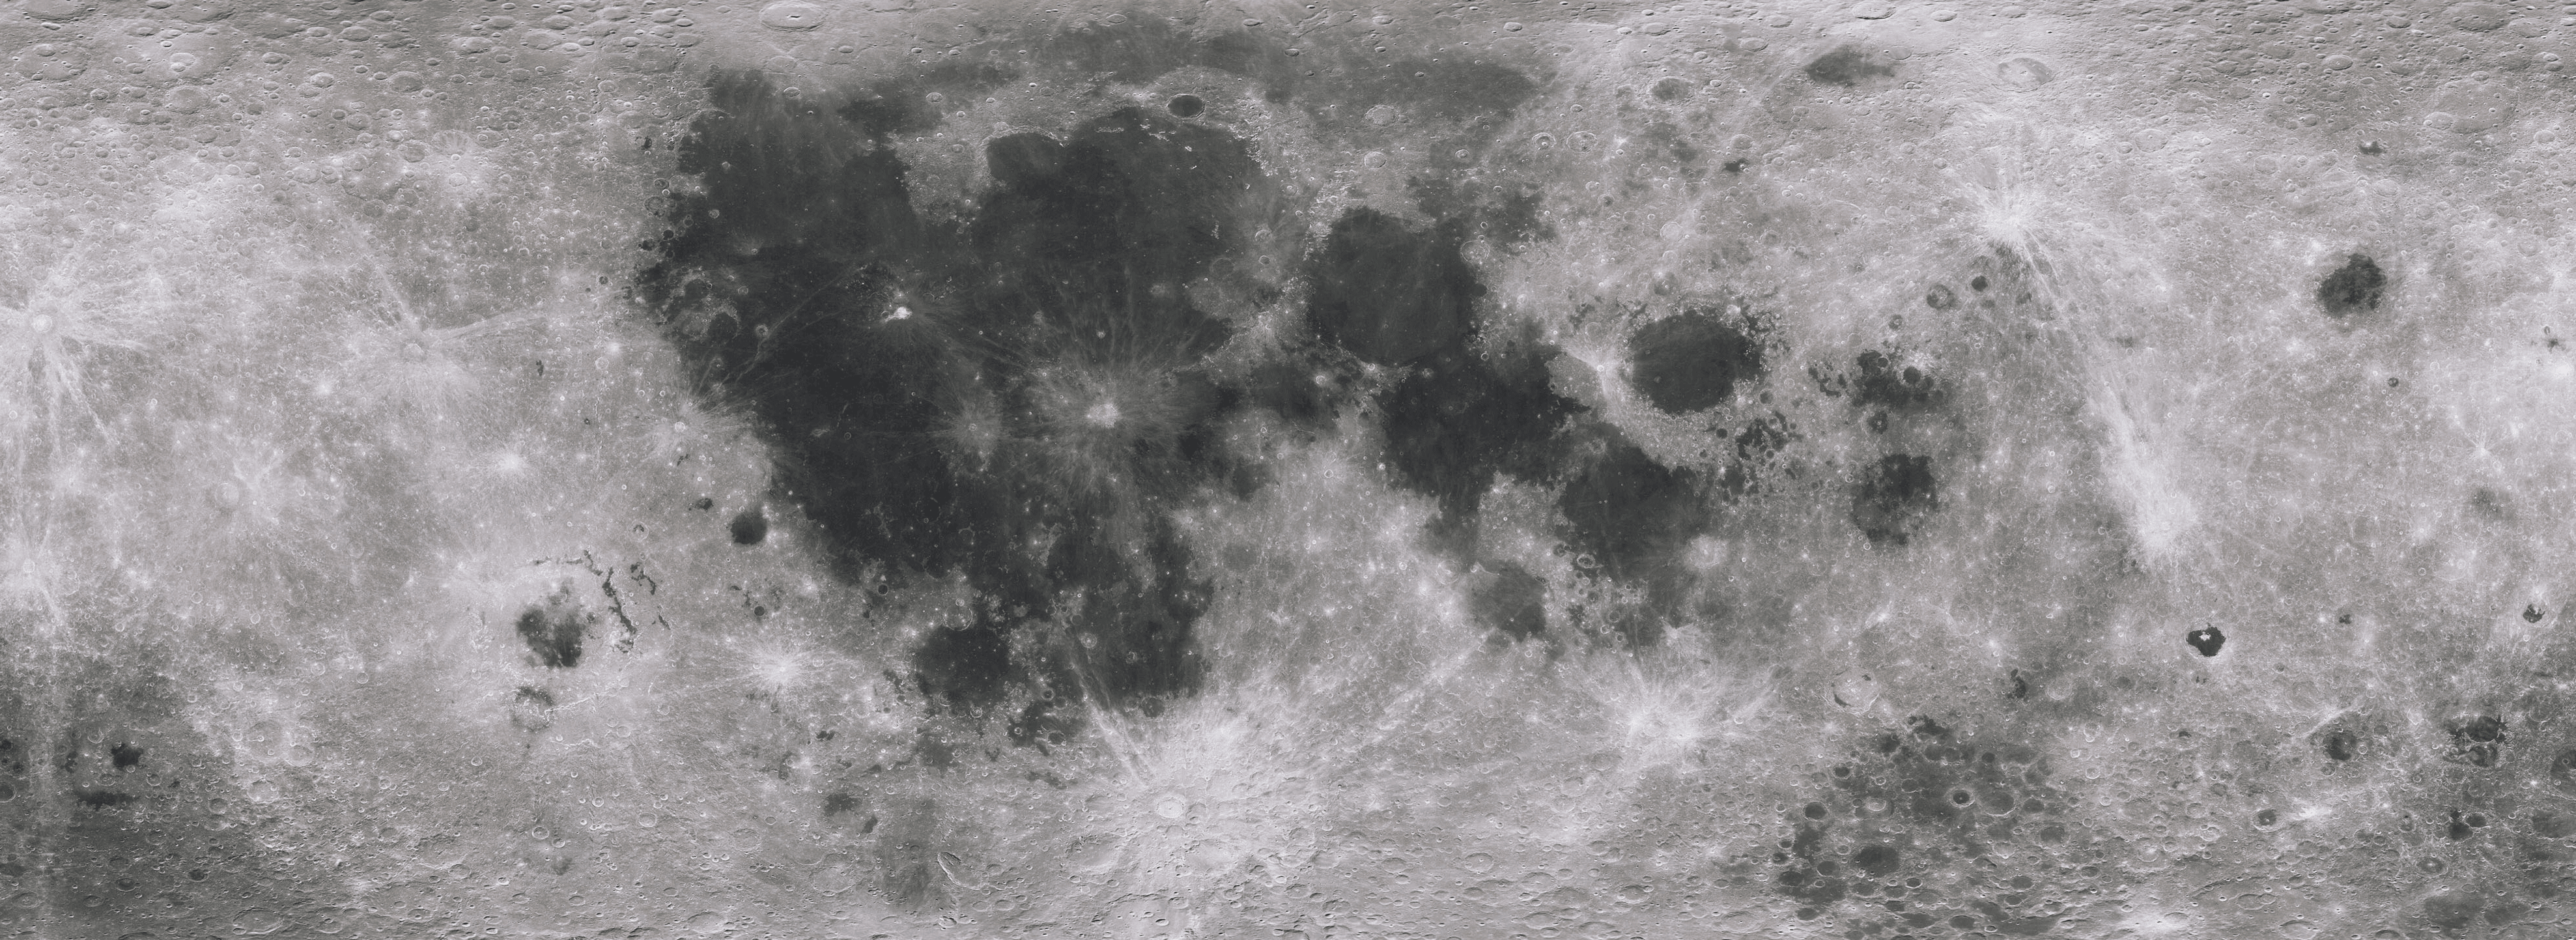 Lunar Moon Plots